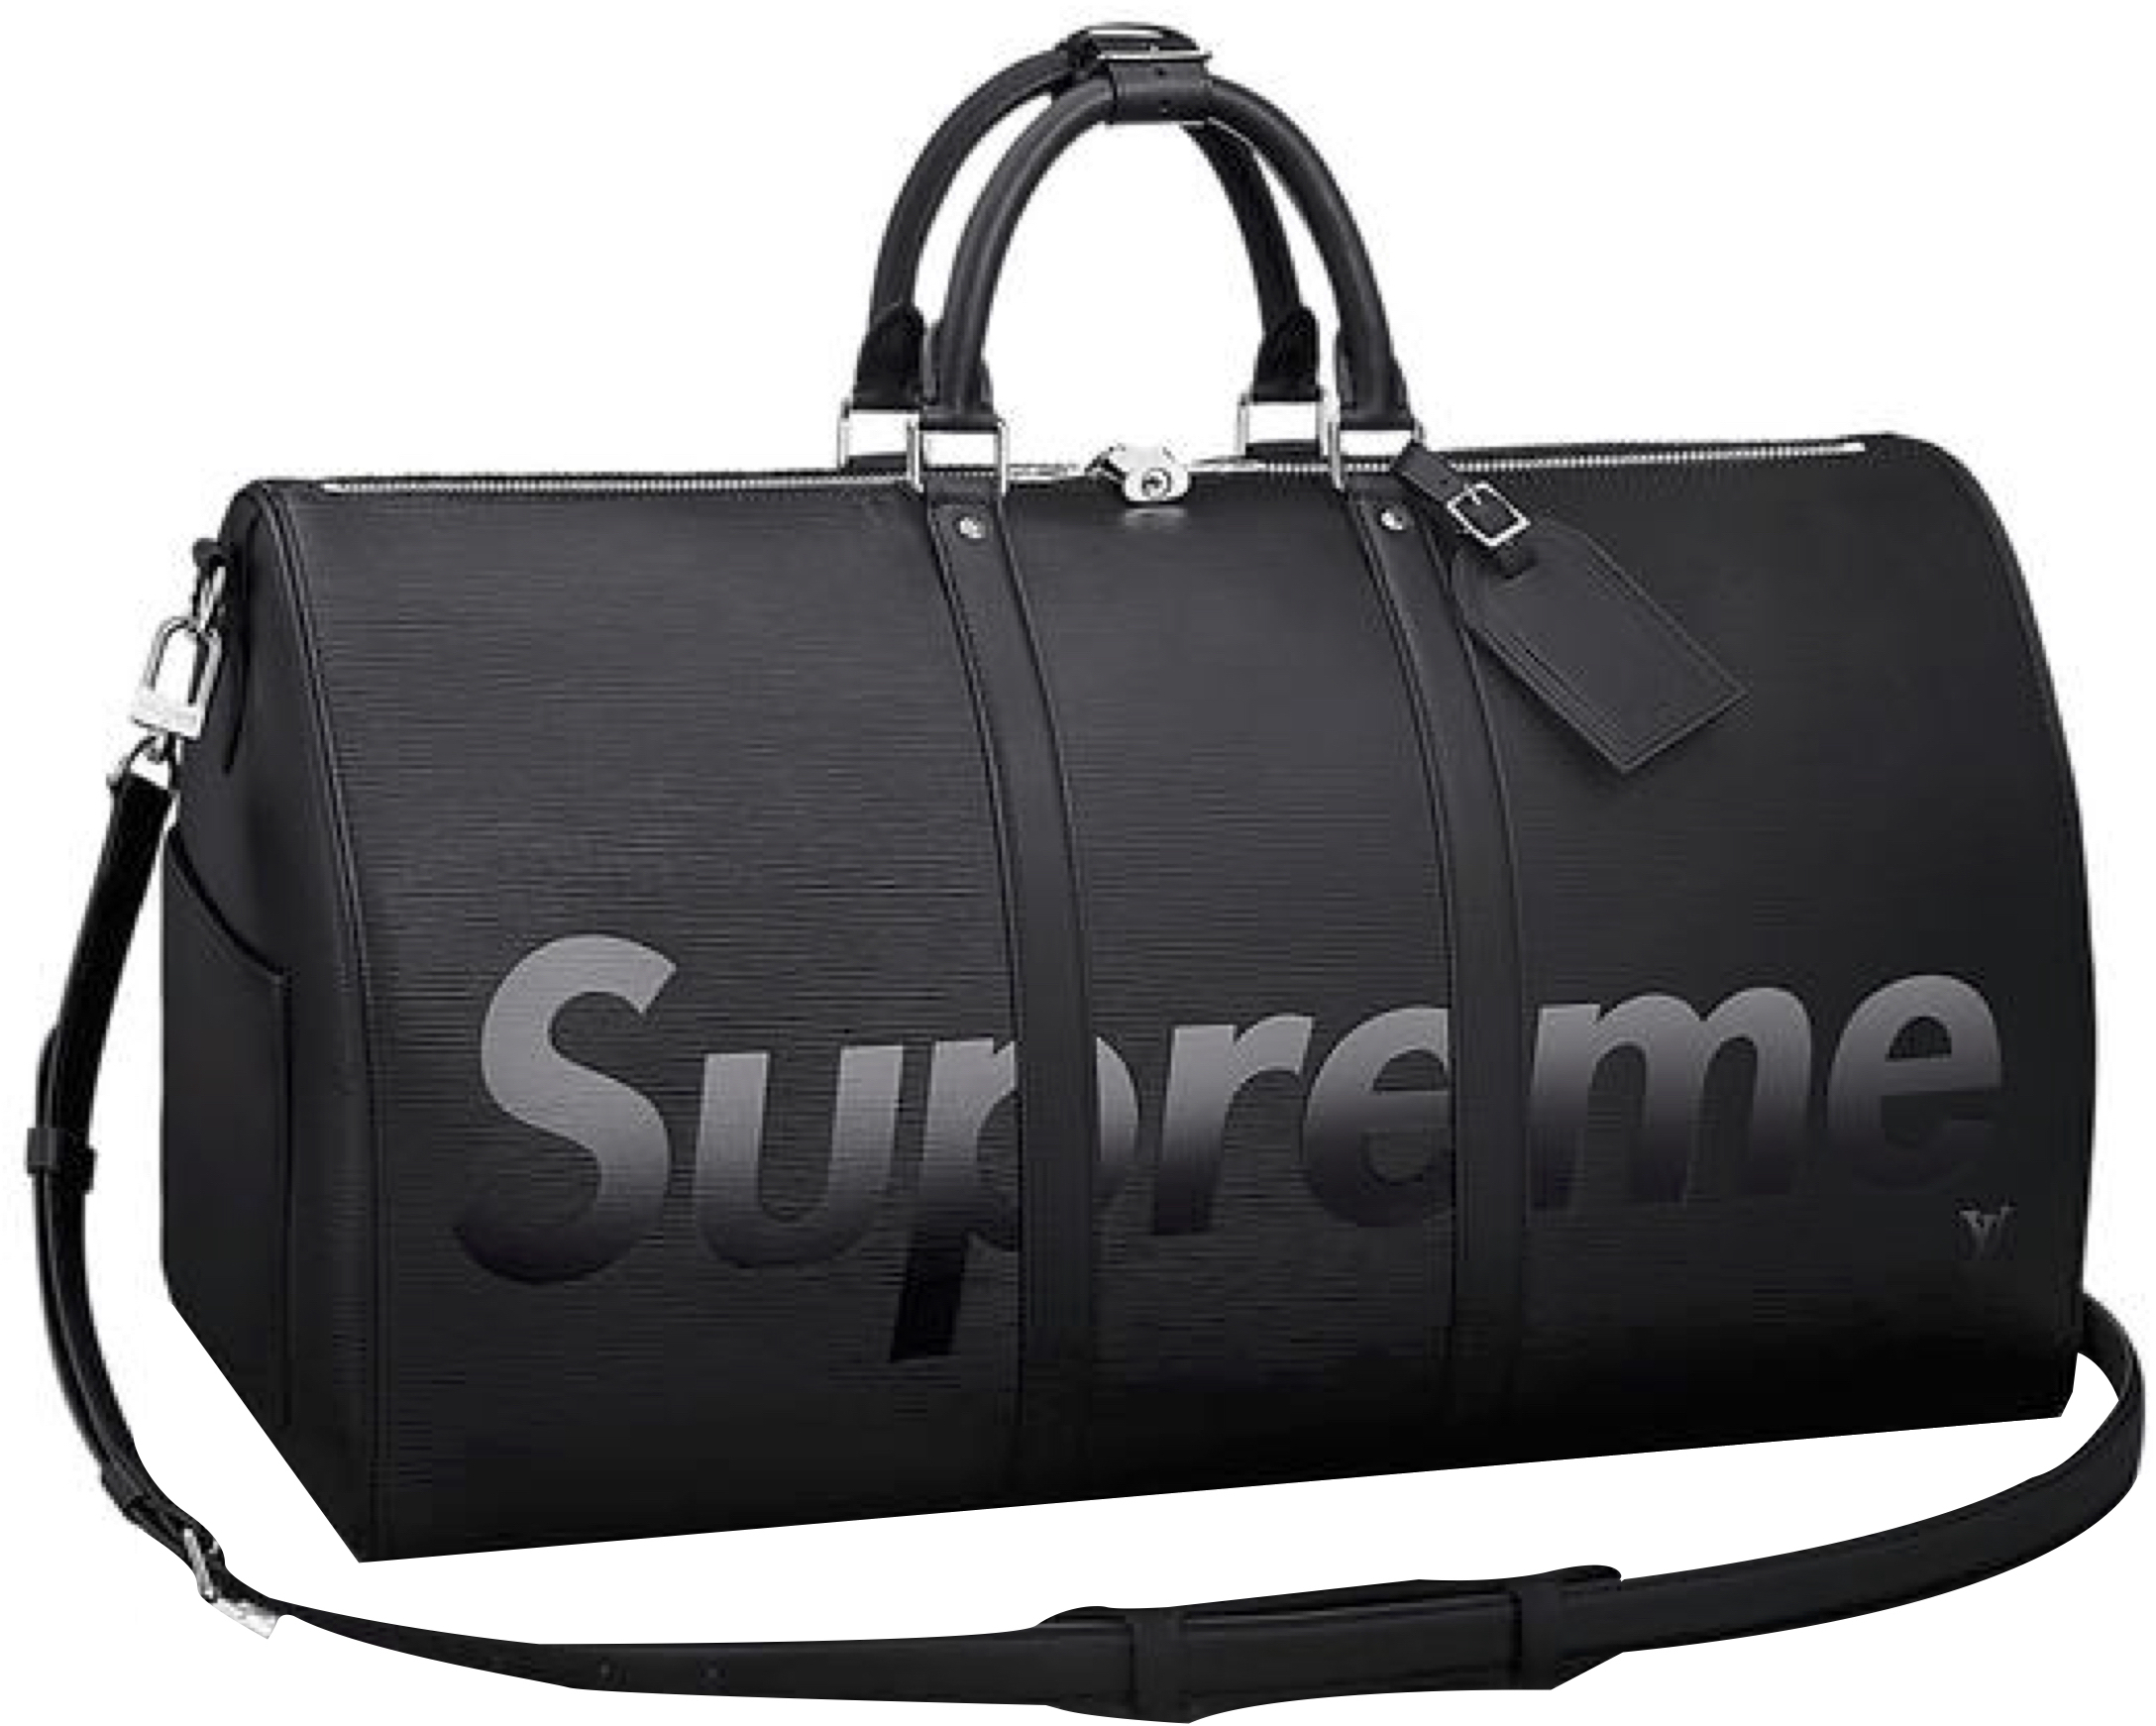 REAL VS FAKE COMPARISON Louis Vuitton x Supreme DUFFLE BAG Black  YouTube